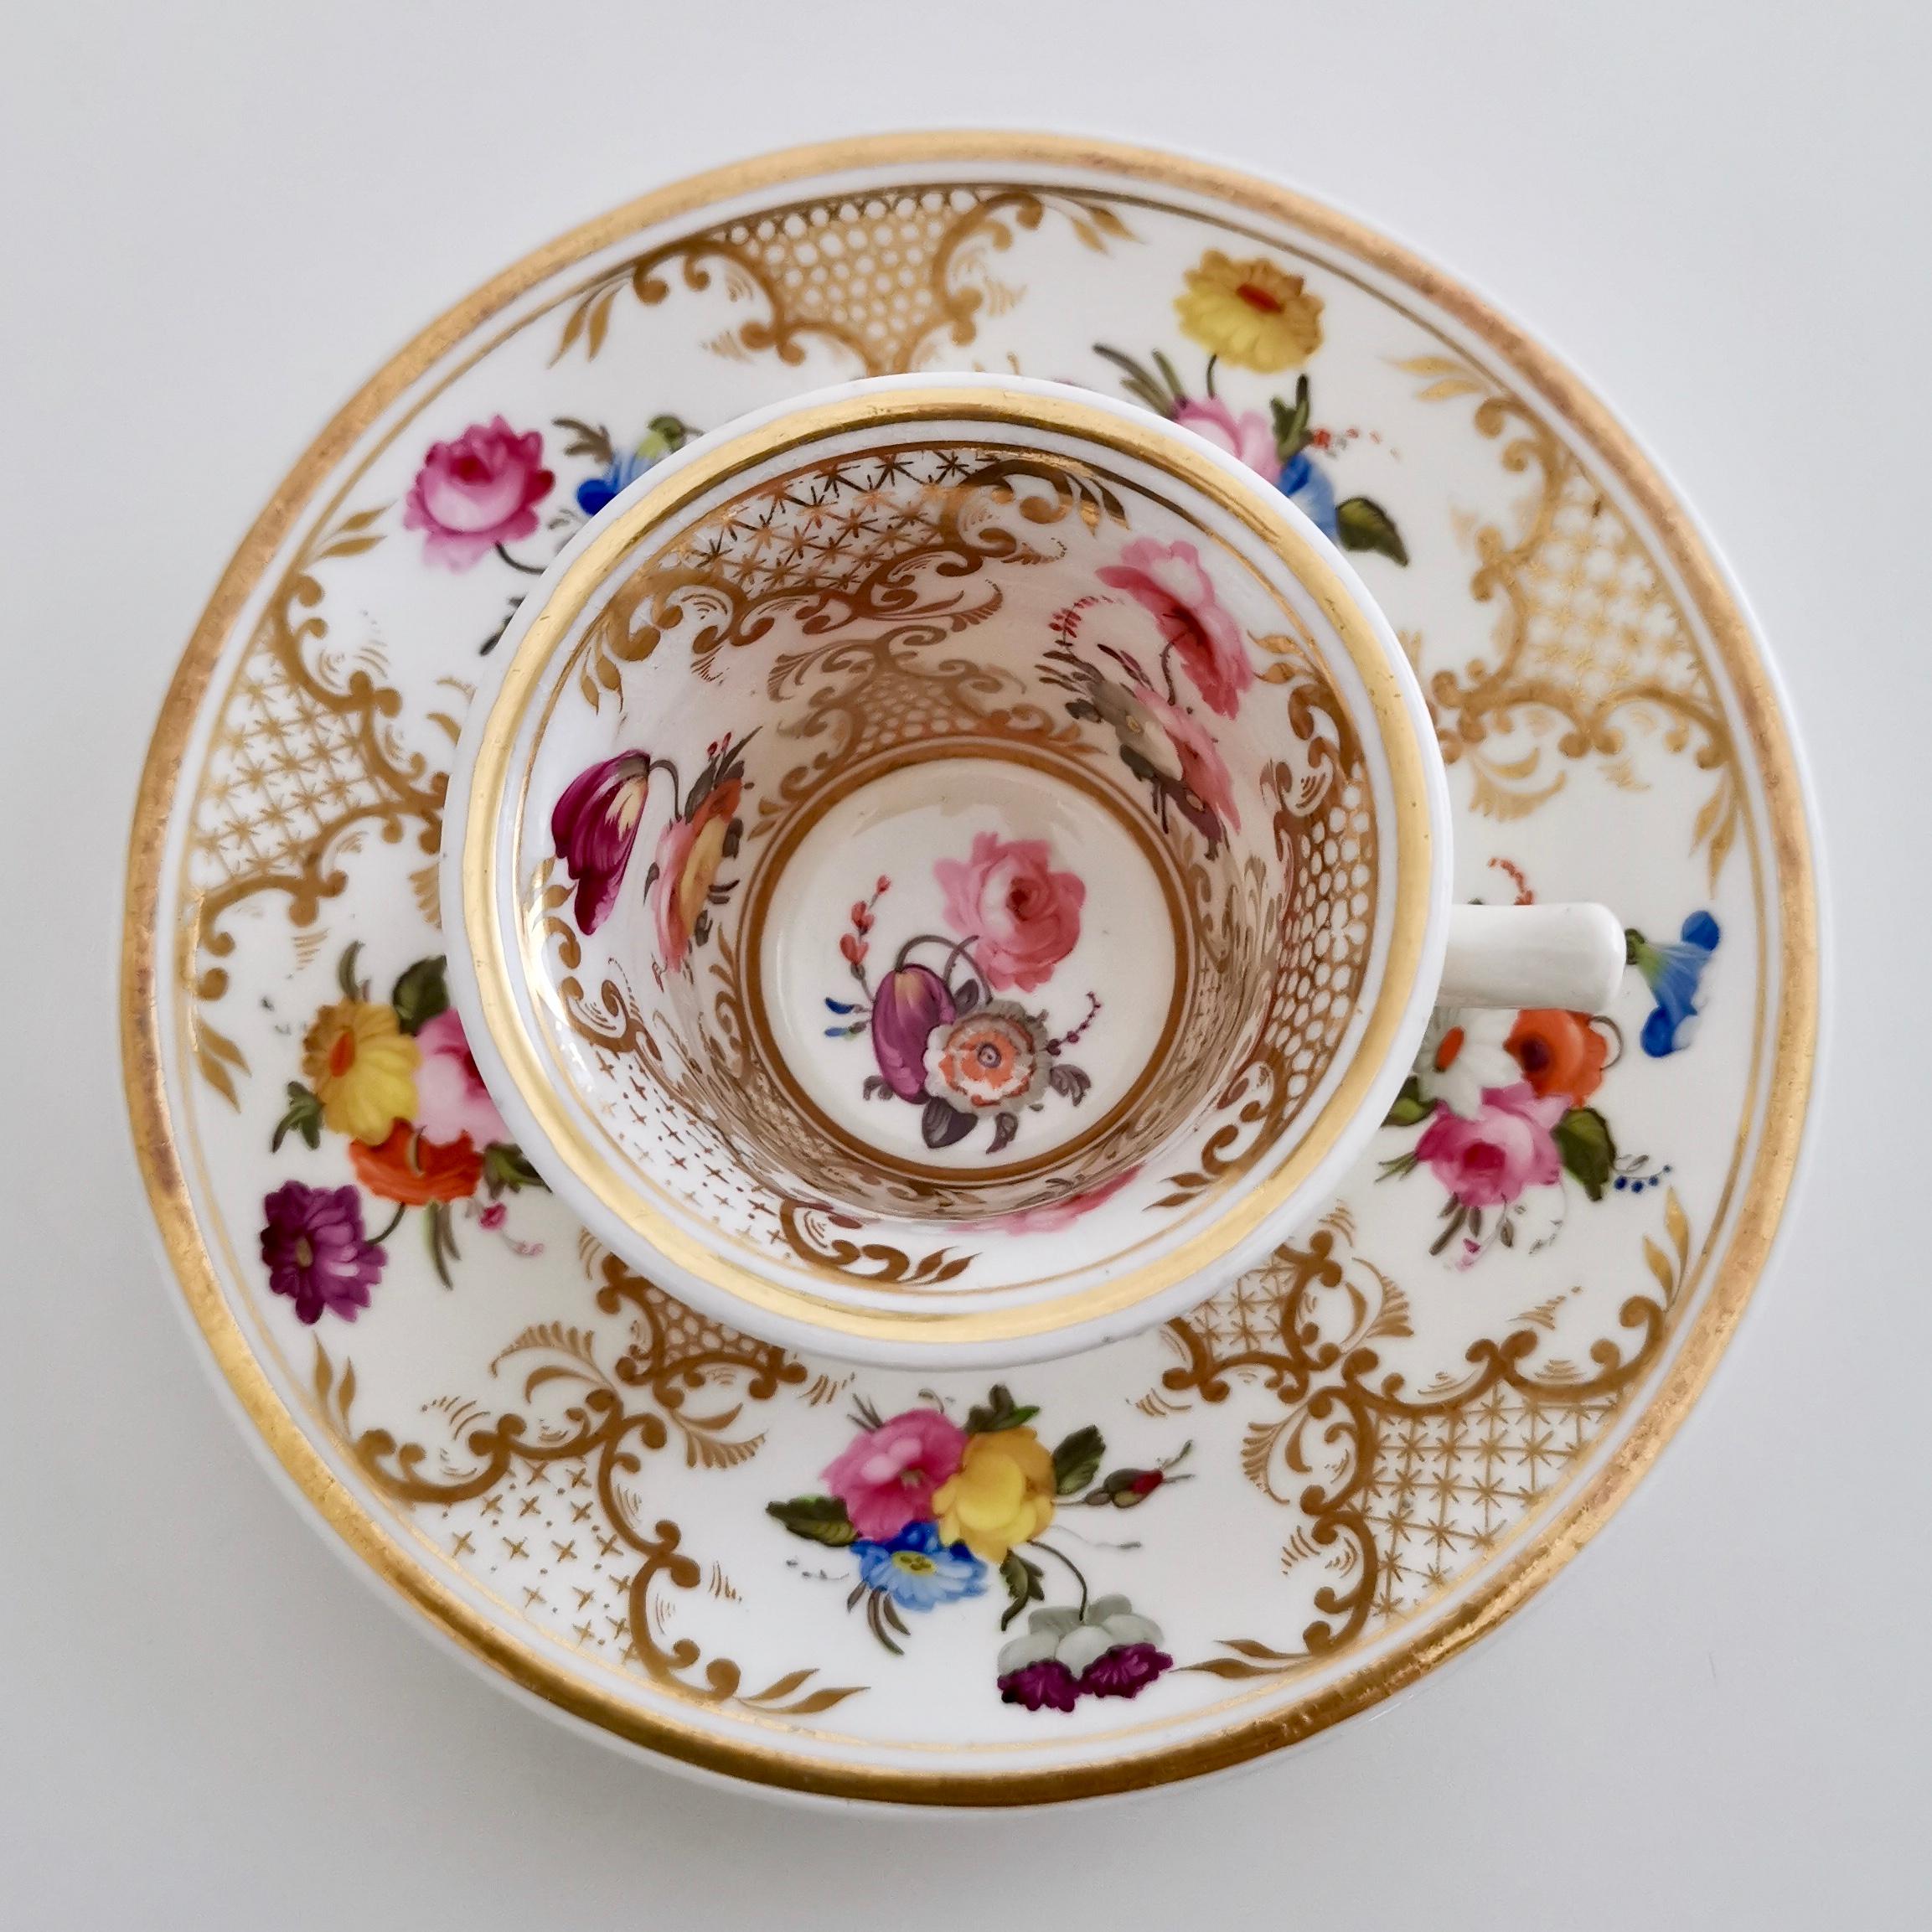 Rathbone Porcelain Teacup Trio, Hand Painted Flowers and Gilt, Regency ca 1820 (Frühes 19. Jahrhundert)